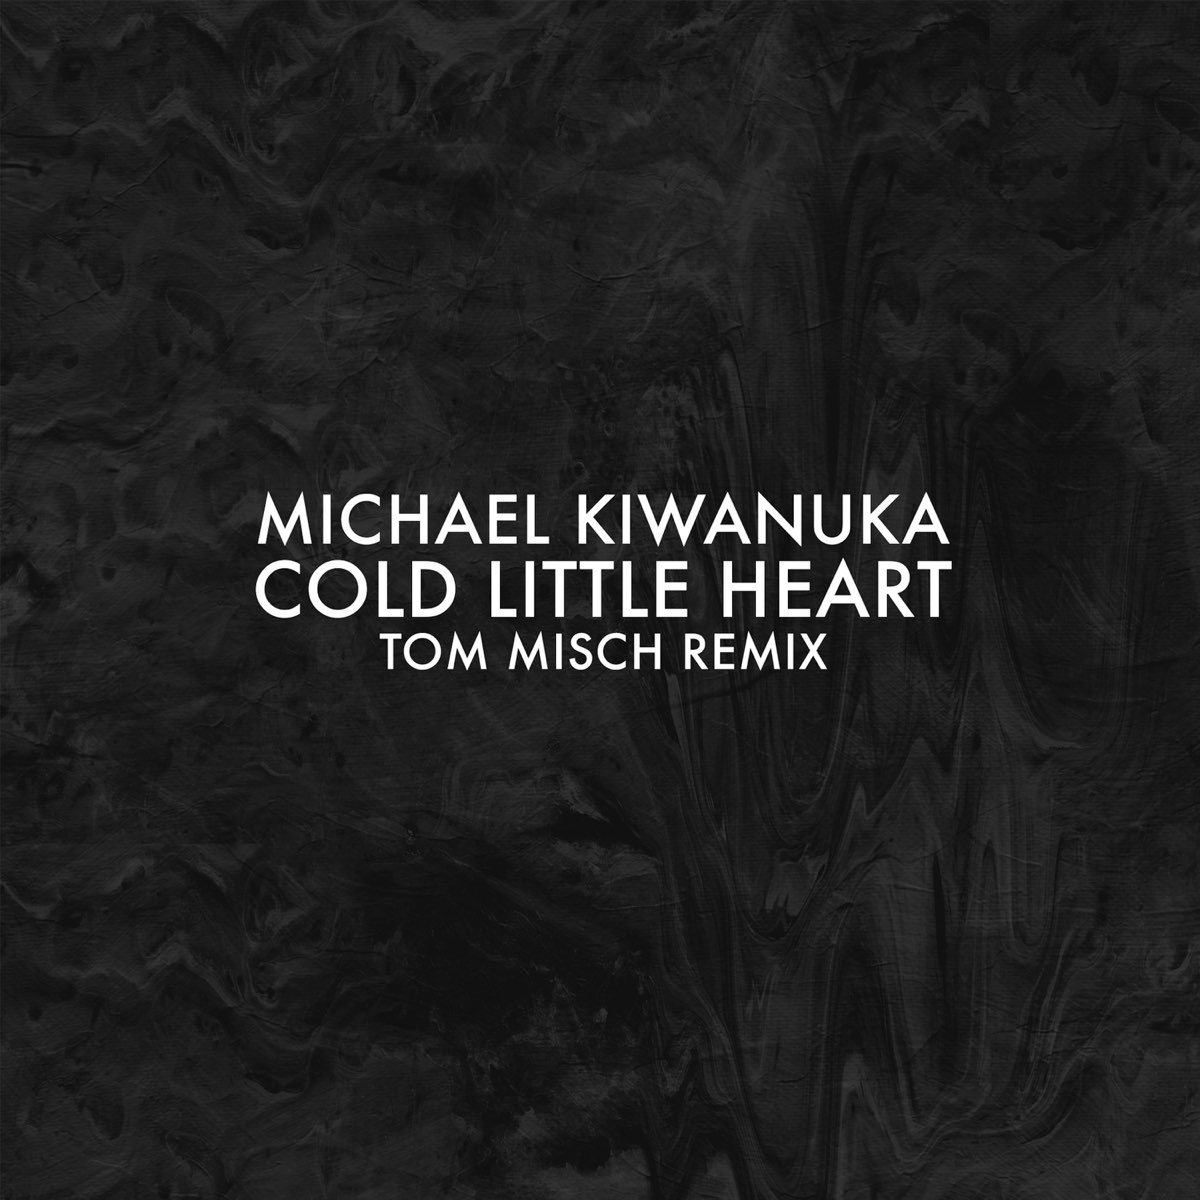 Cold little Heart. Michael Kiwanuka альбом. Cold little Heart Radio Edit Michael Kiwanuka.